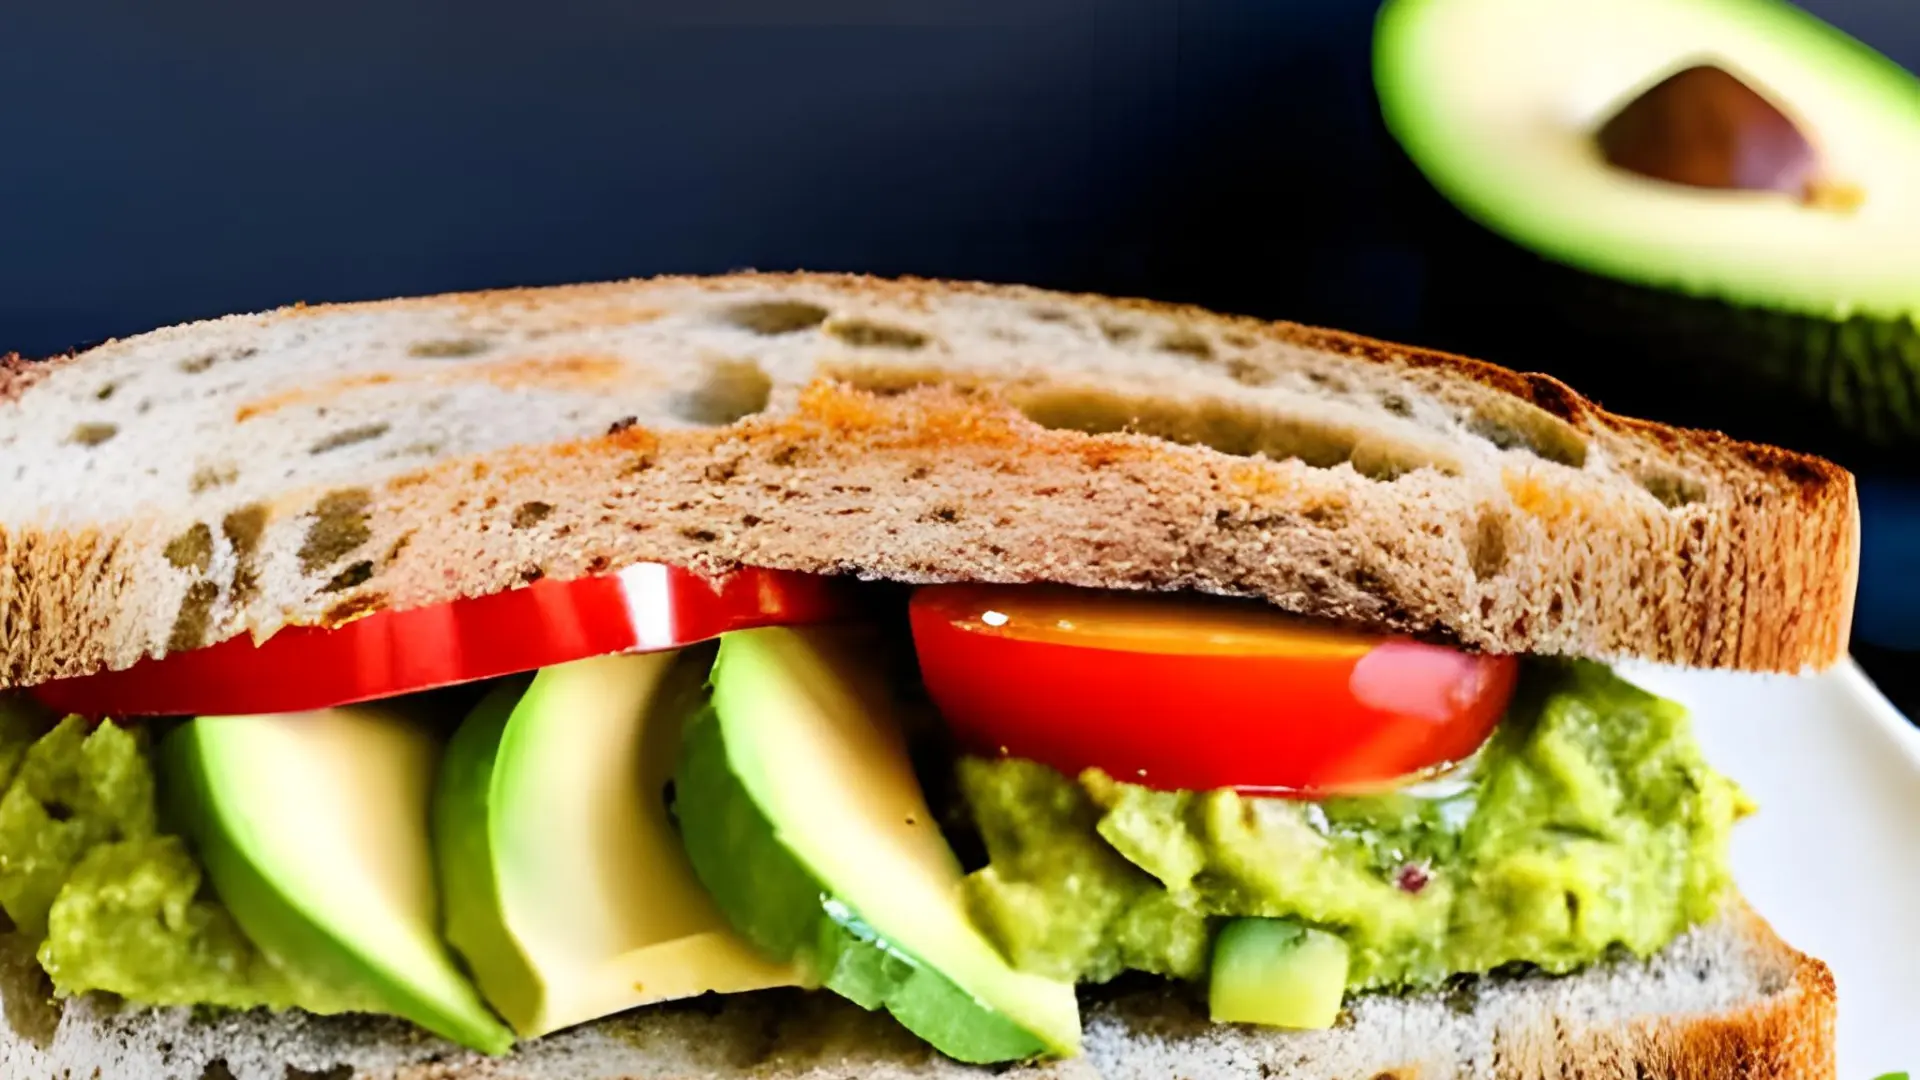 Avocado toast with whole-grain bread